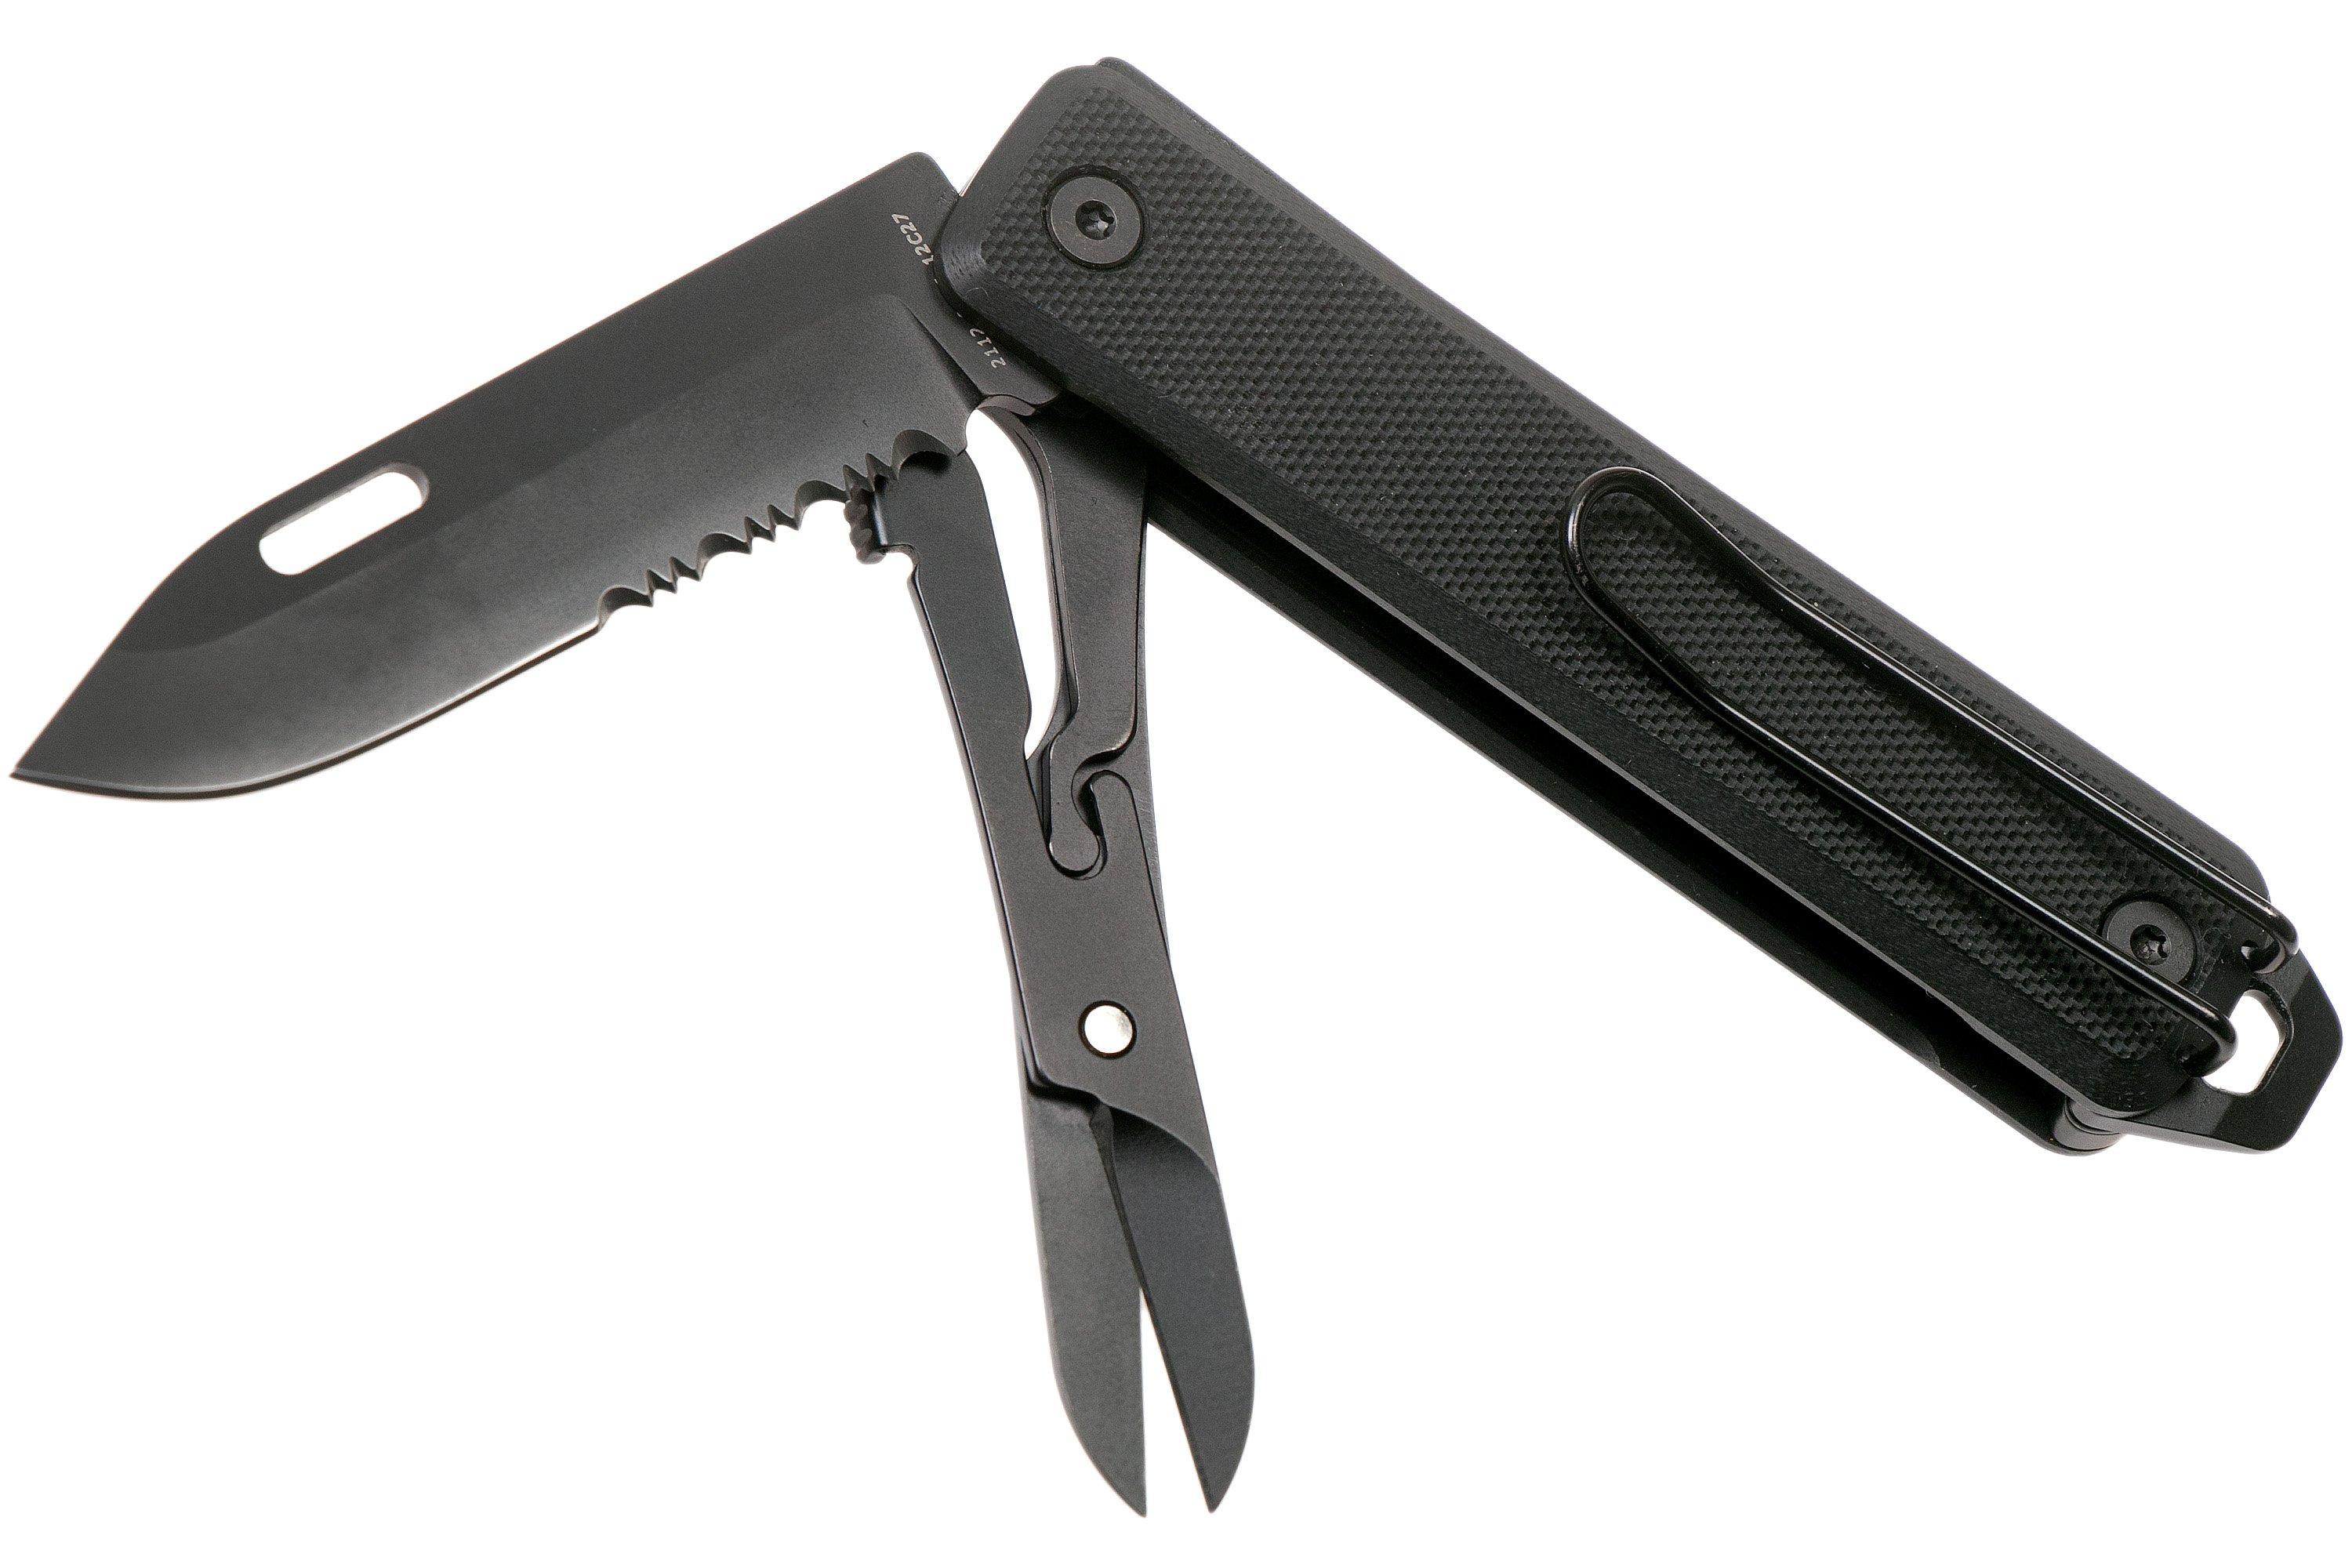 The James Brand Ellis Scissors, Black, Black, G10 pocket knife